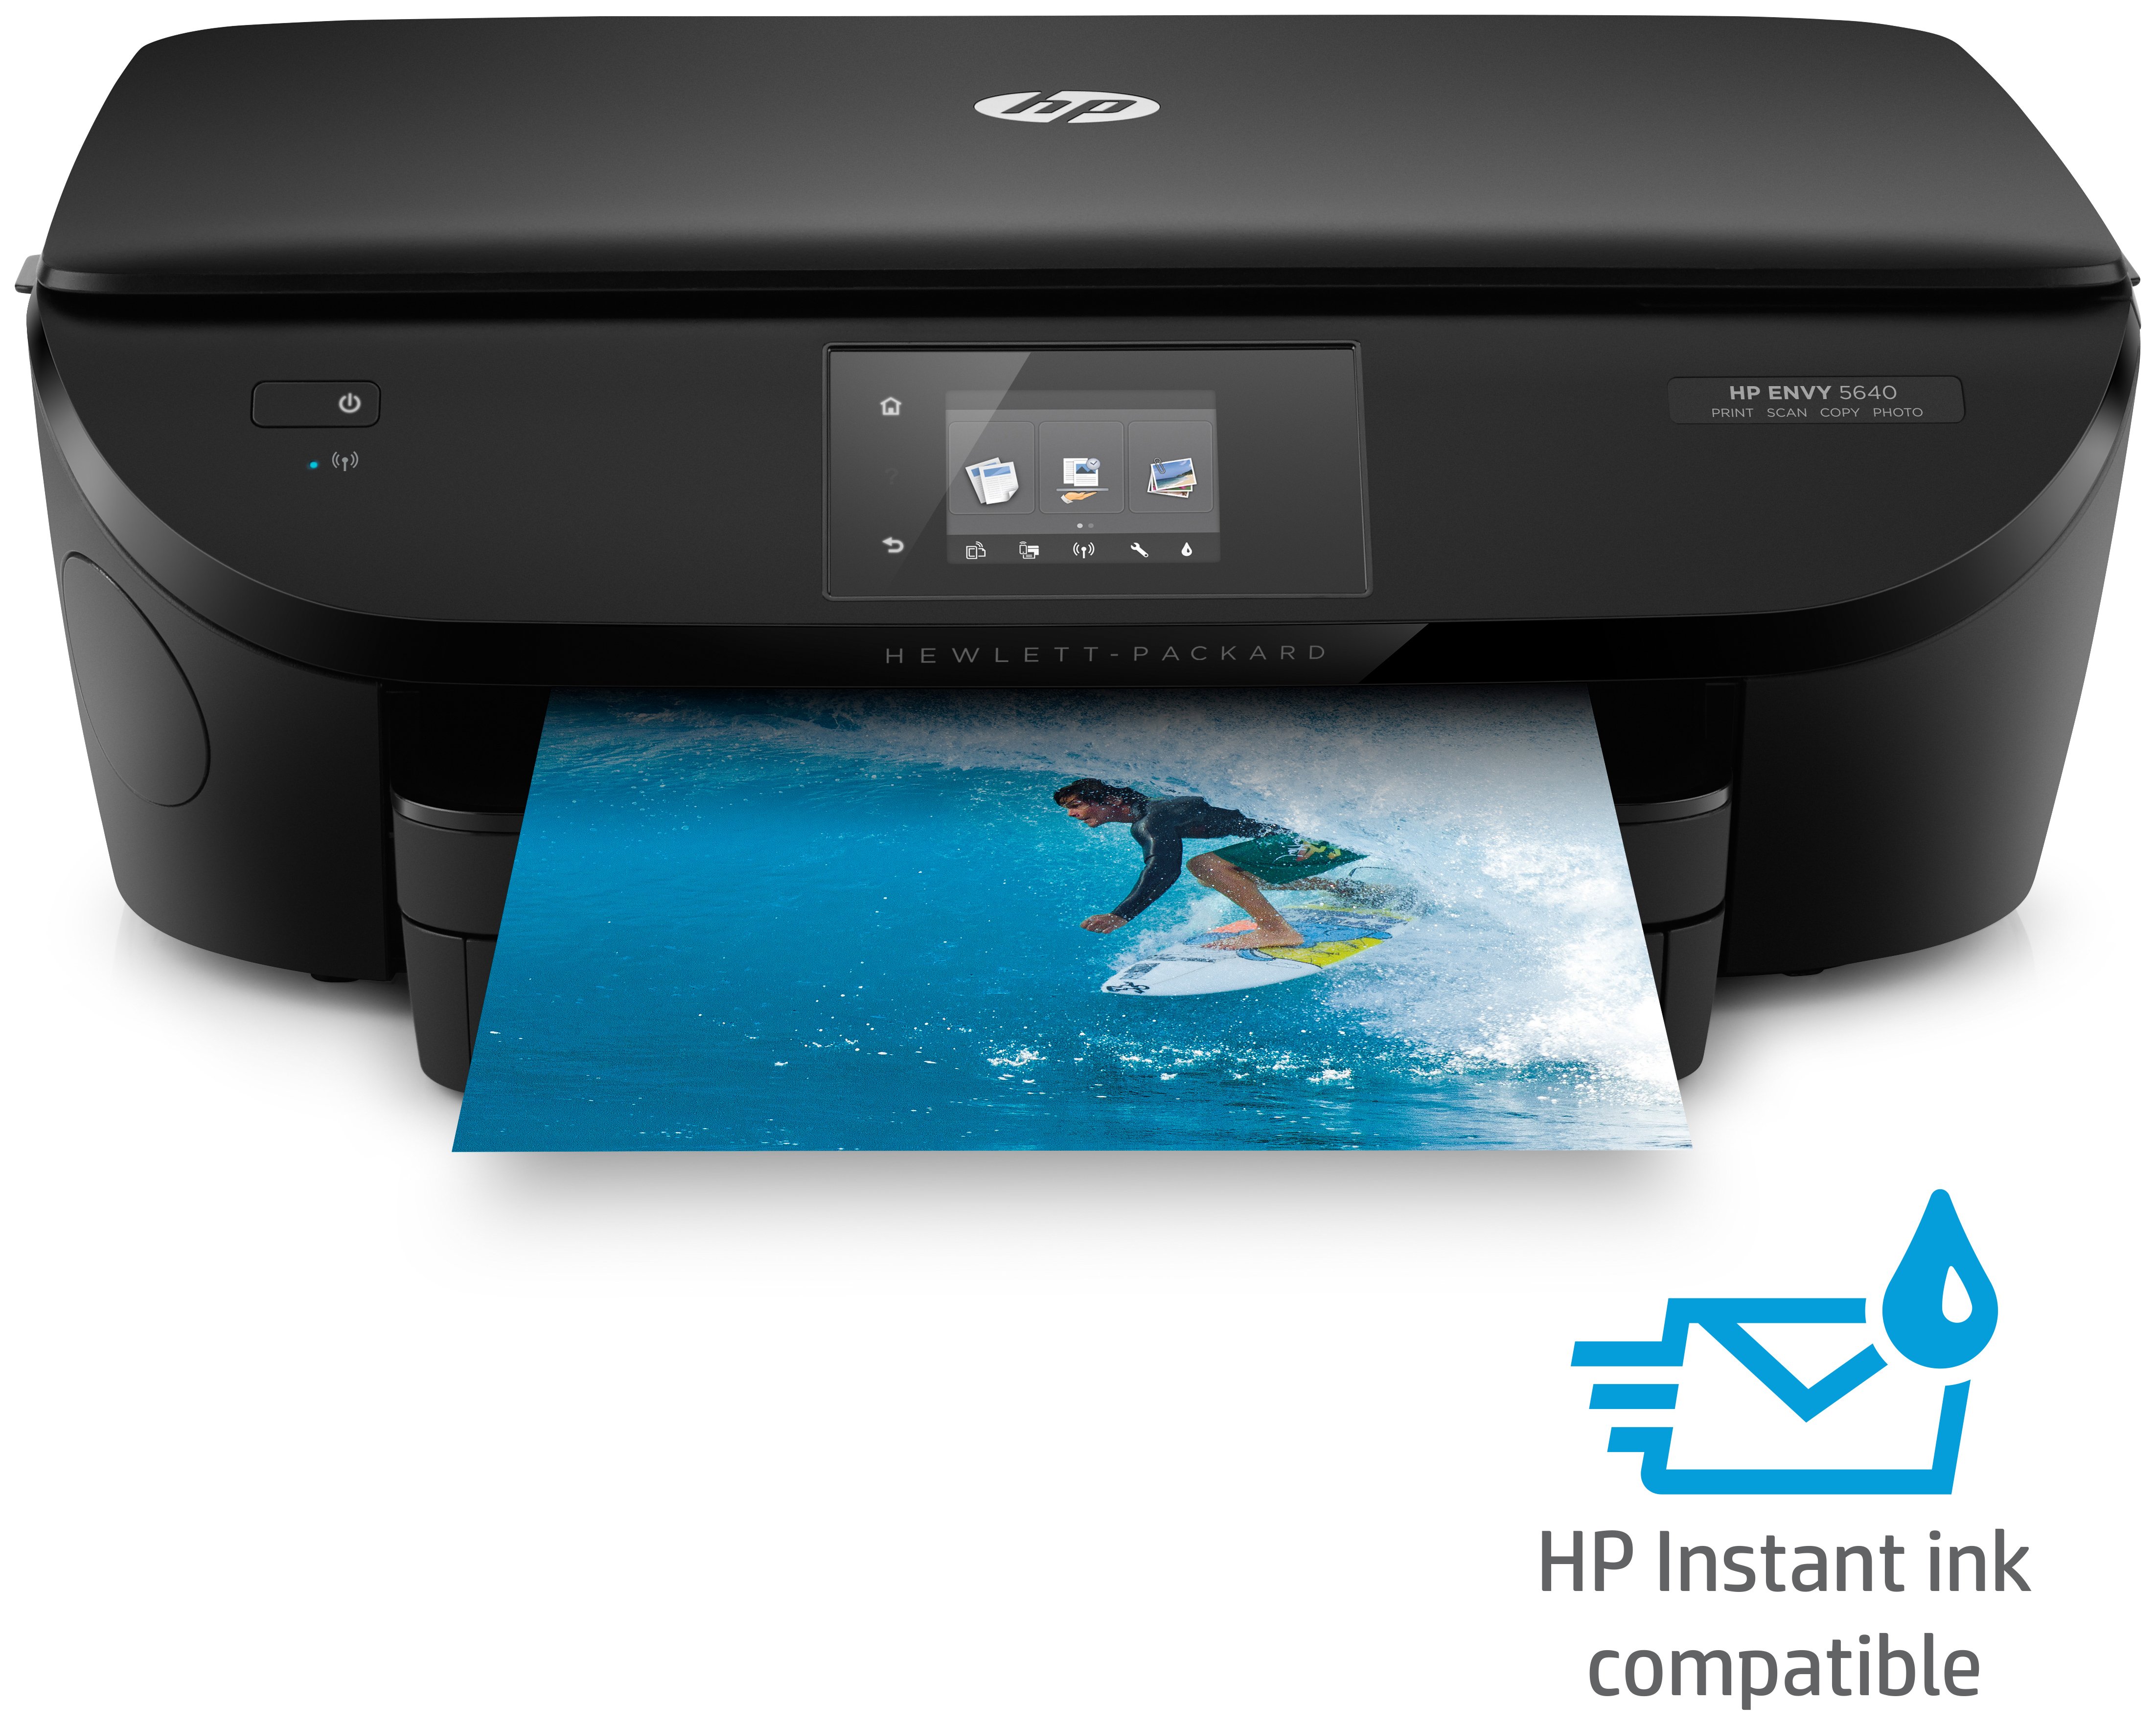 HP Envy 5640 All-in-One Wi-Fi Printer